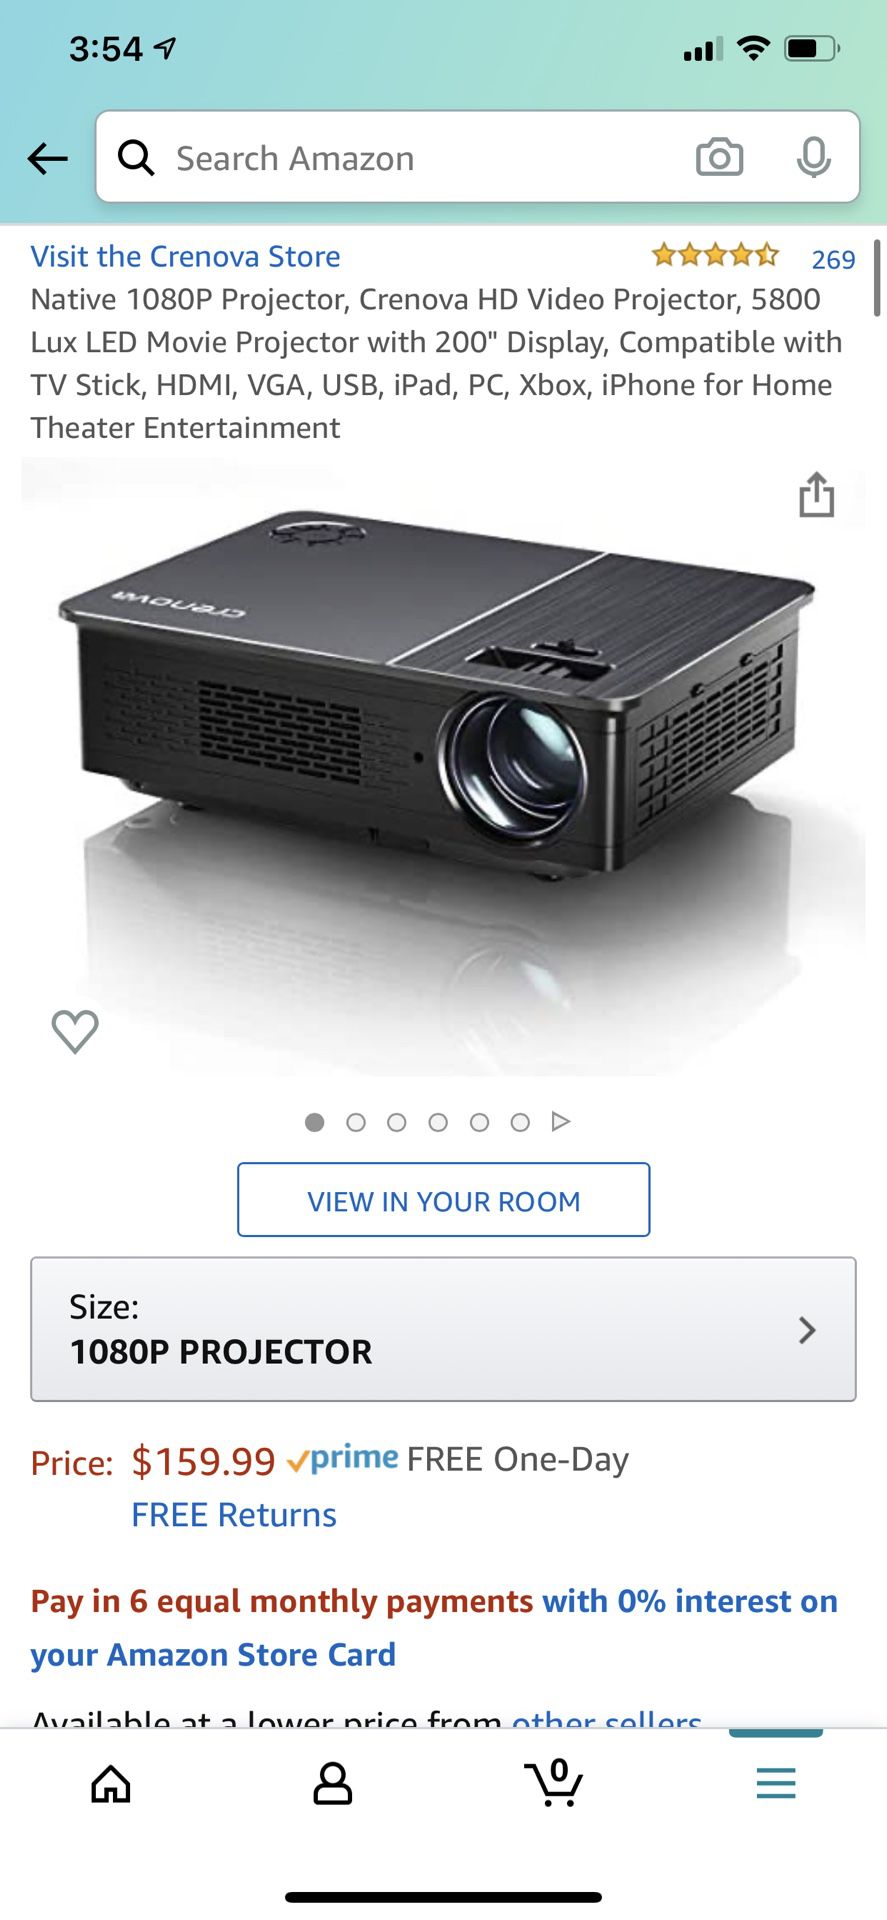 Brand new Native 1080P Projector, Crenova HD Video Projector